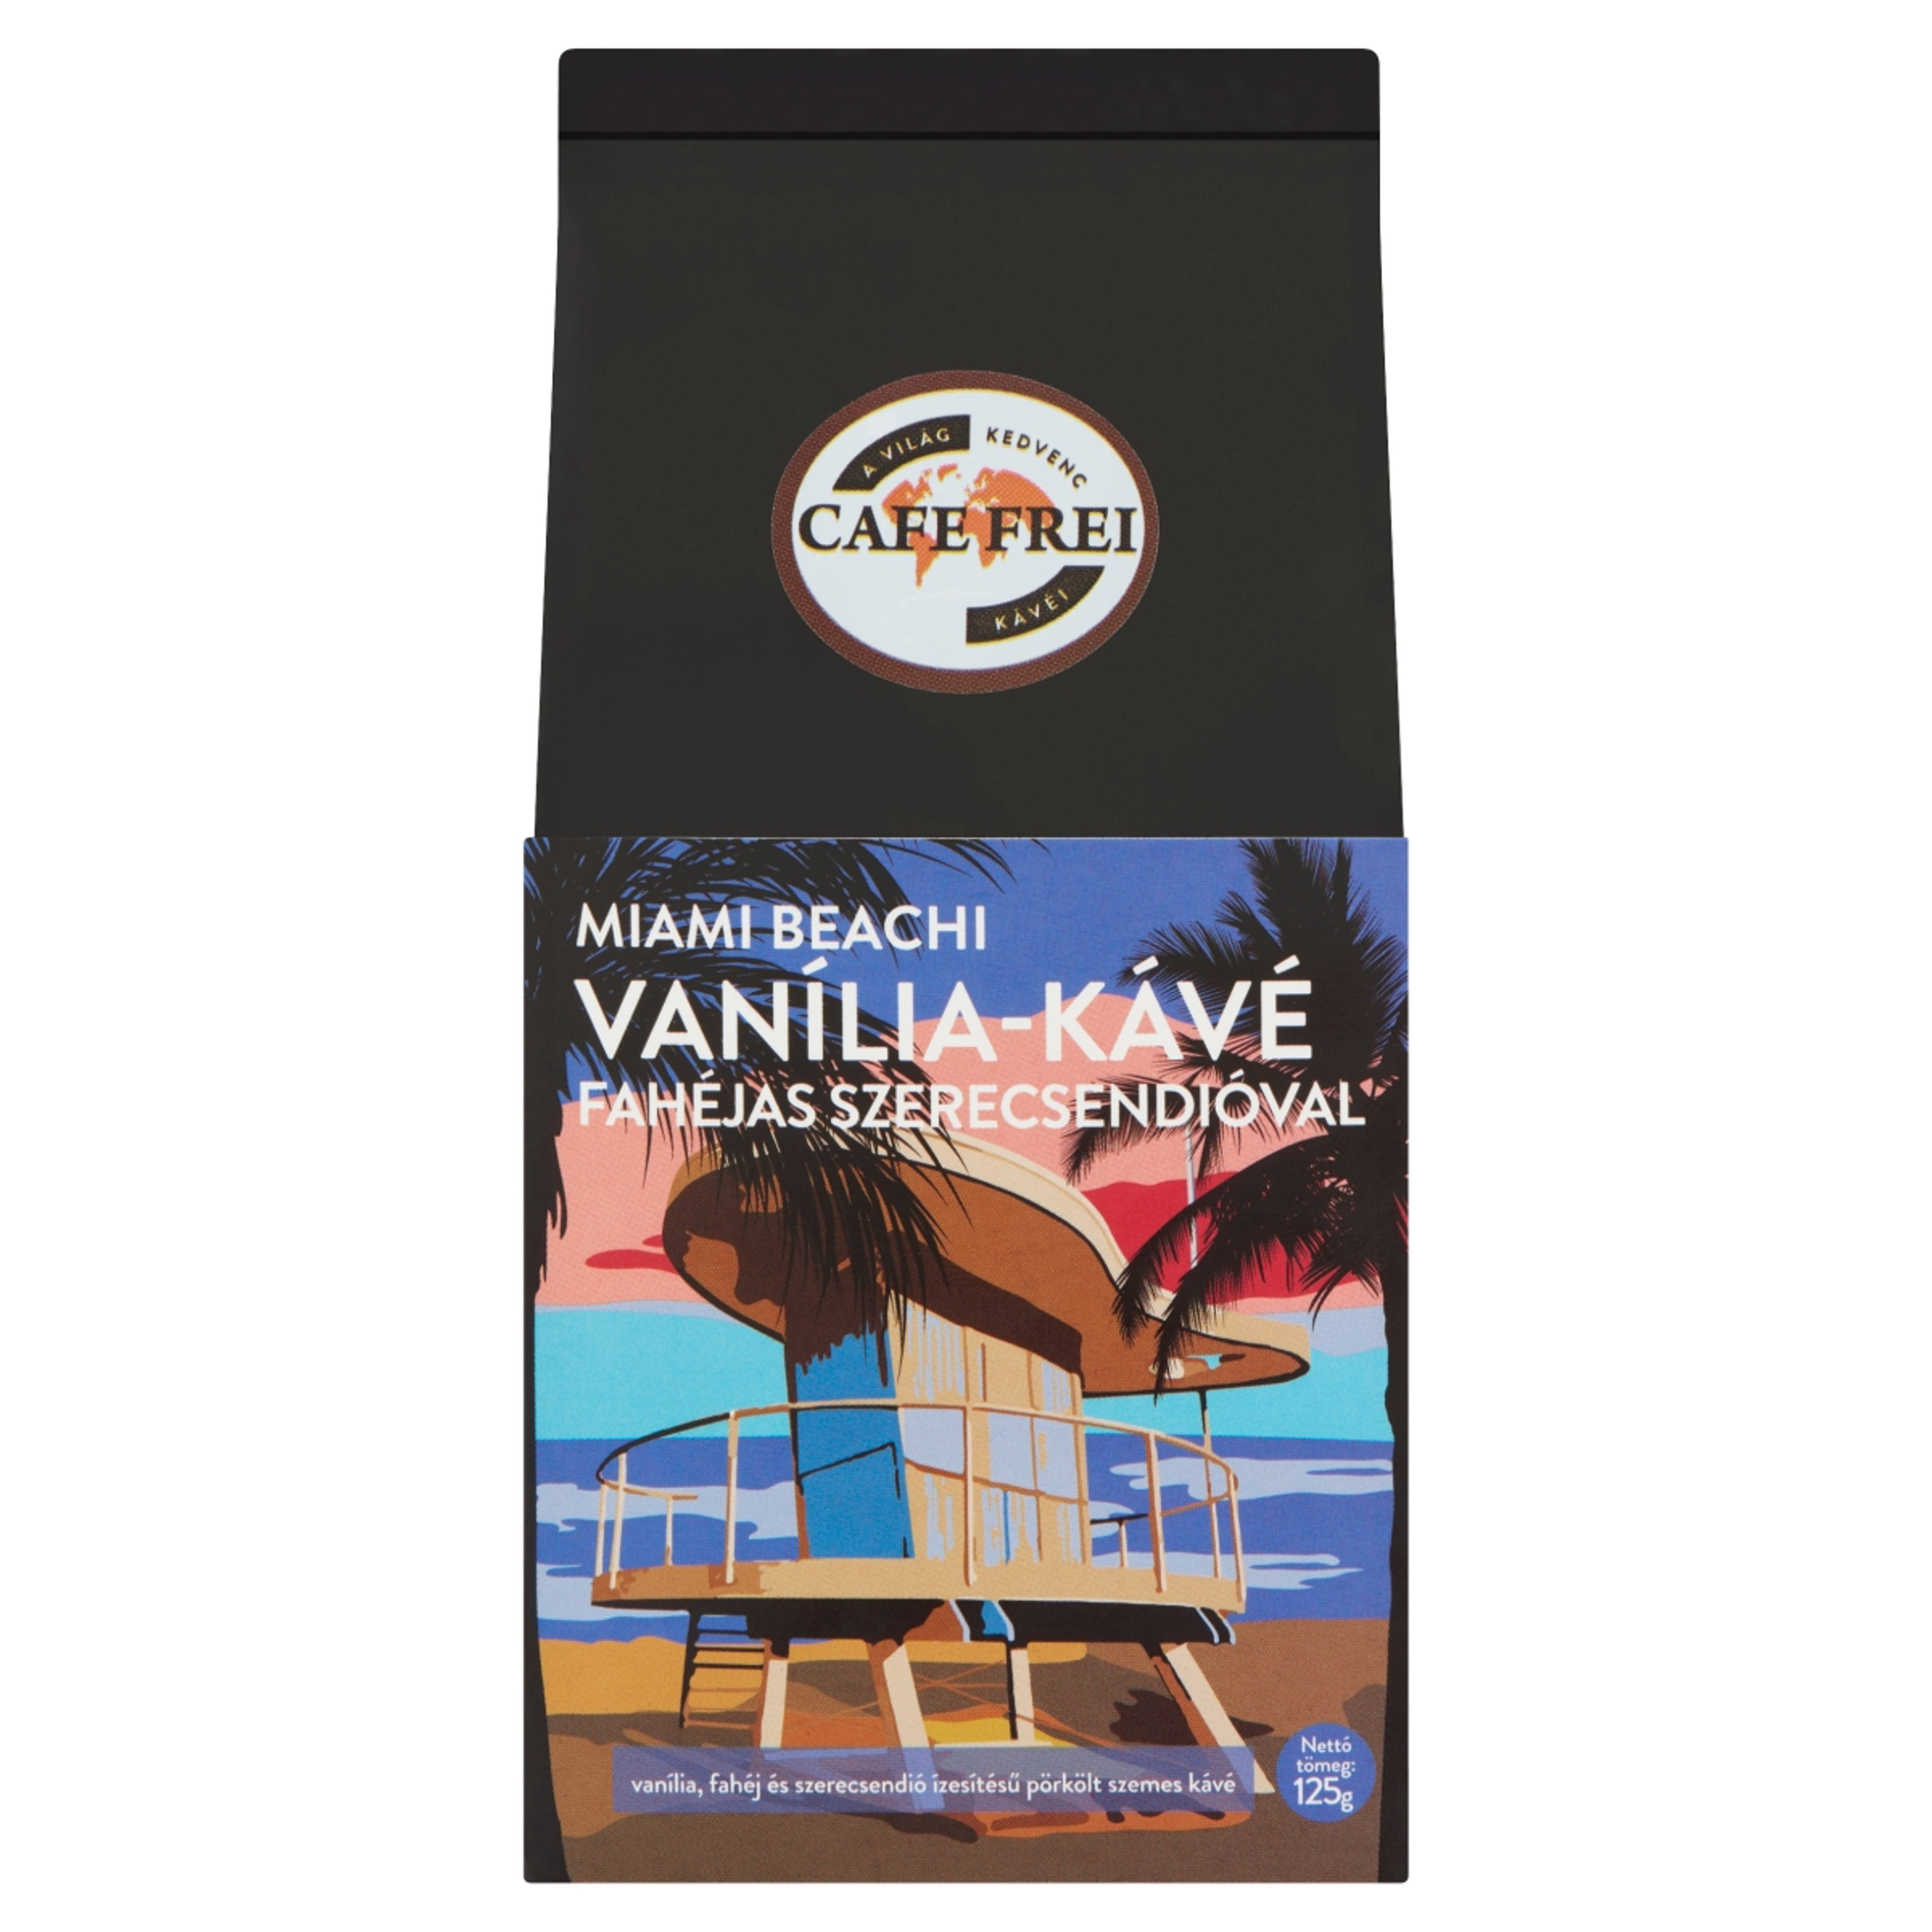 Cafe Frei Miami Beach vanilia szemes kávé - 125 g